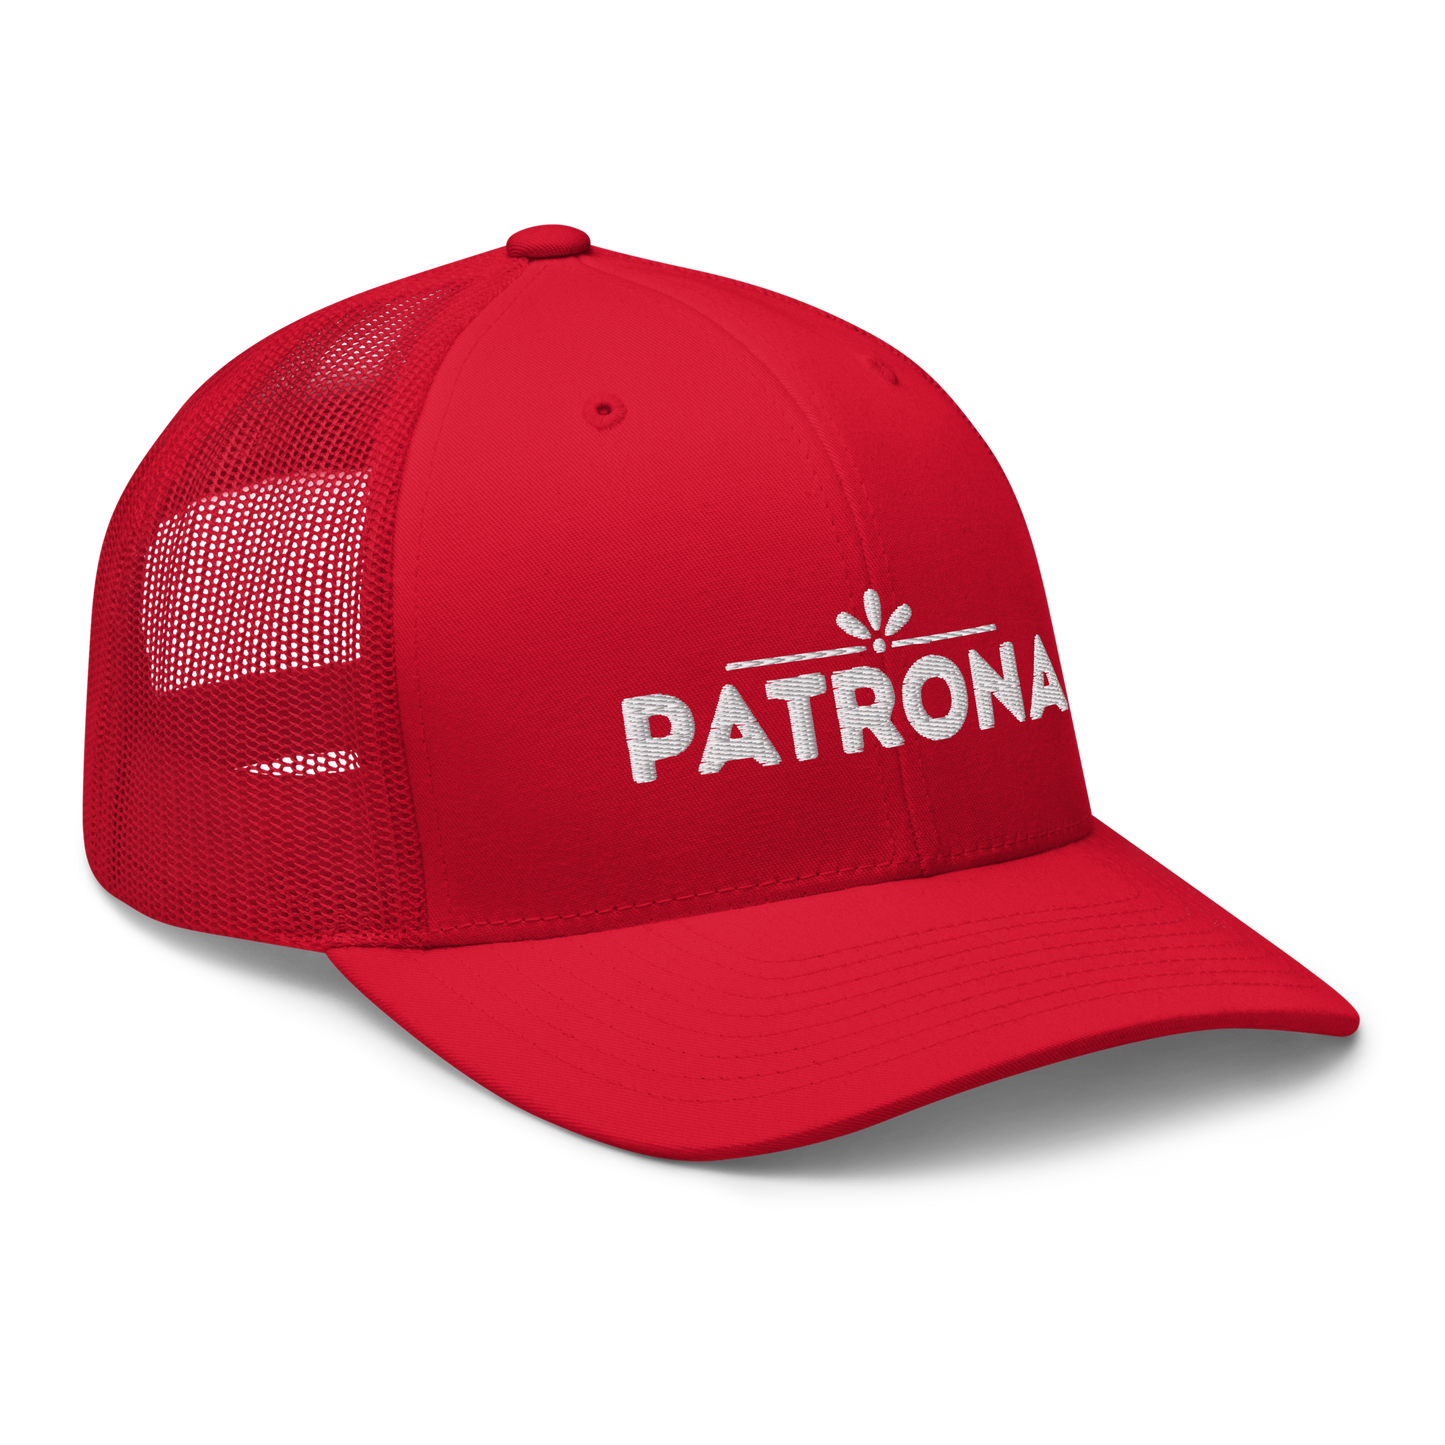 Patrona Mesh Hat